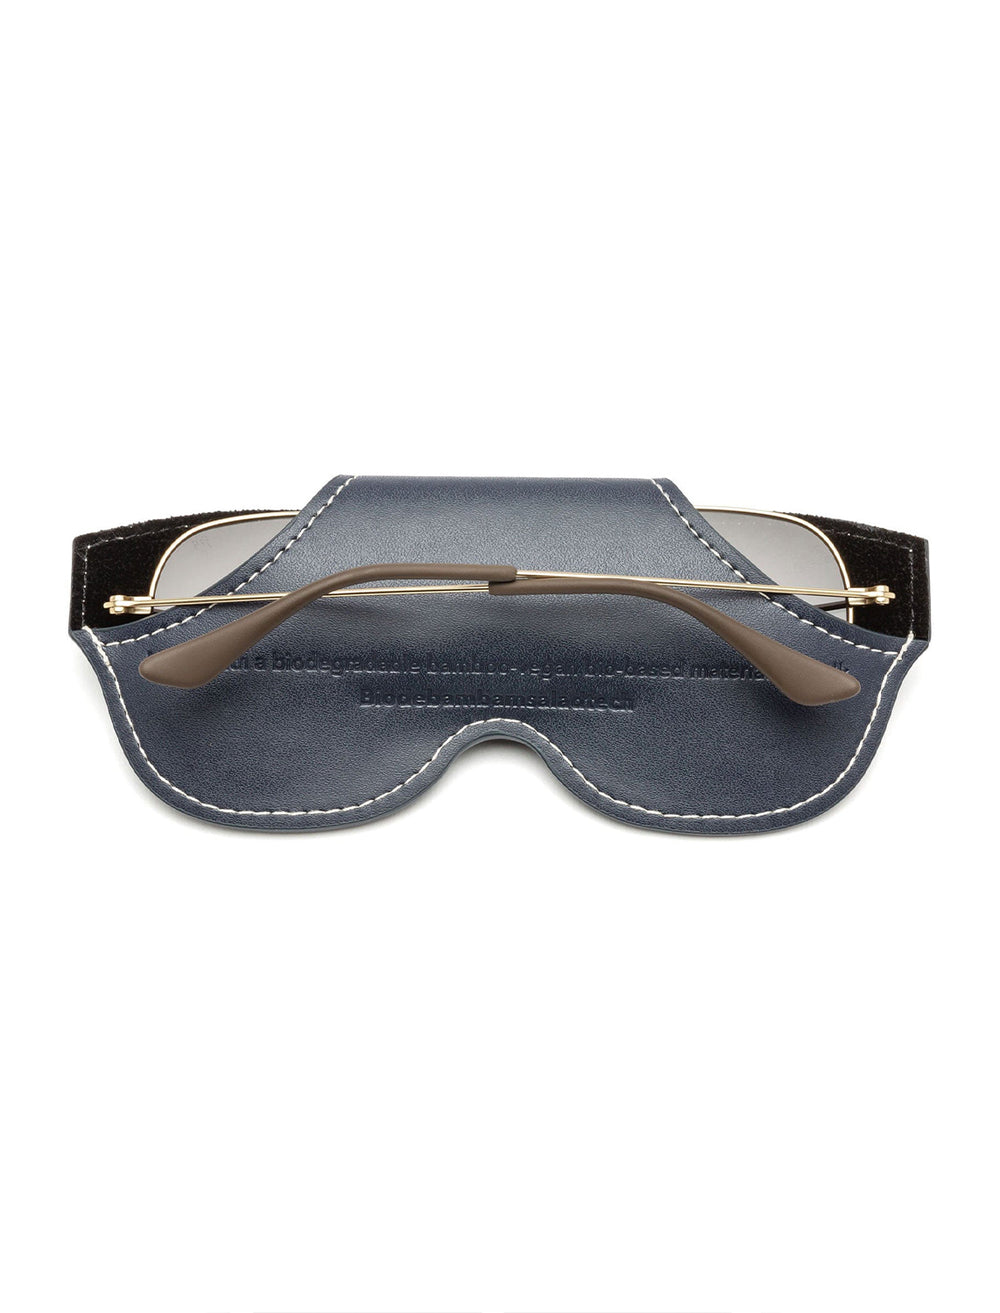 Back view of Caddis' net fit eyewear case in mesopelagic.